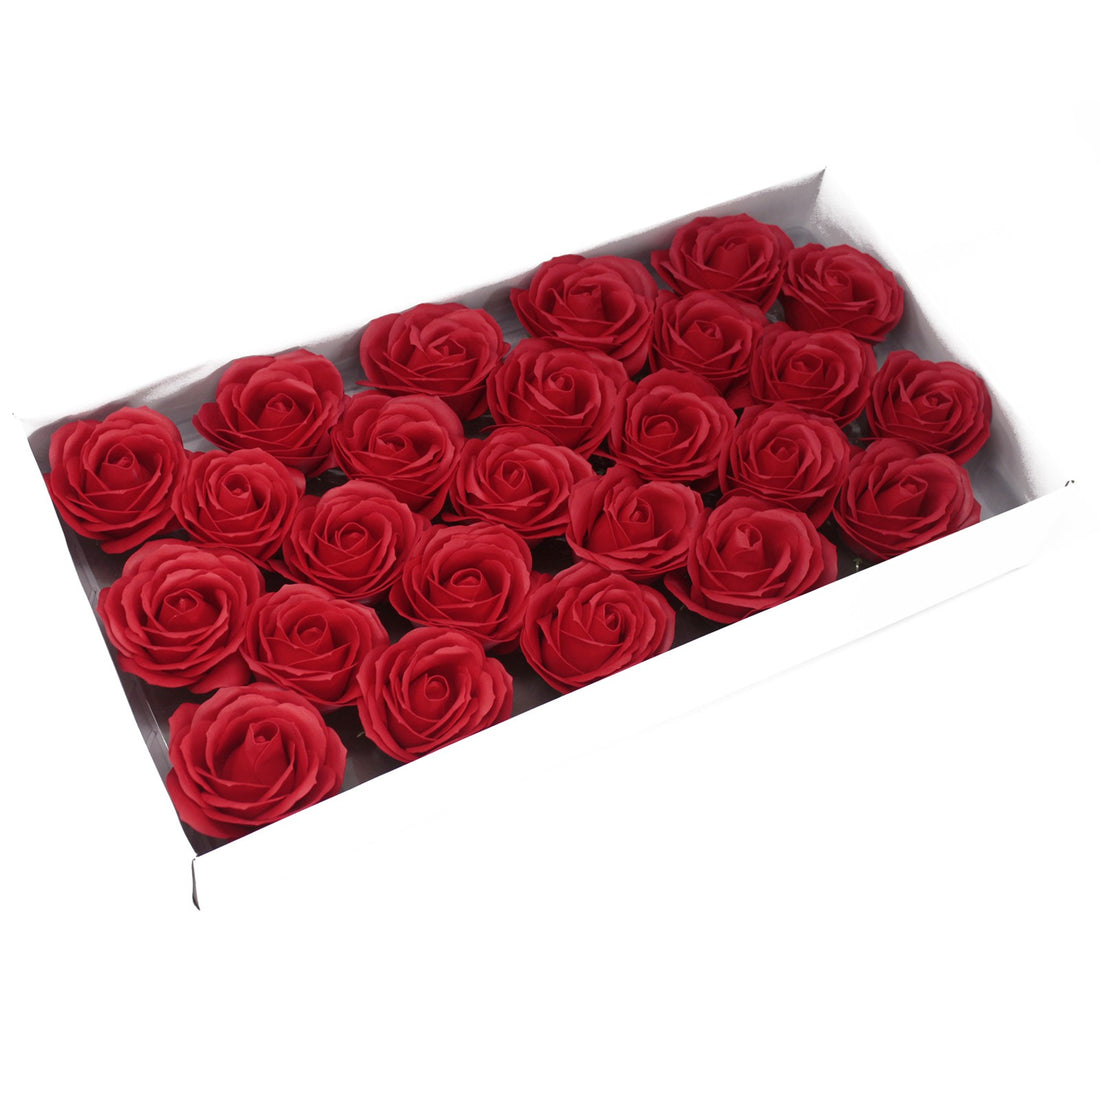 Craft Soap Flowers - Lrg Rose - Red x 10 pcs